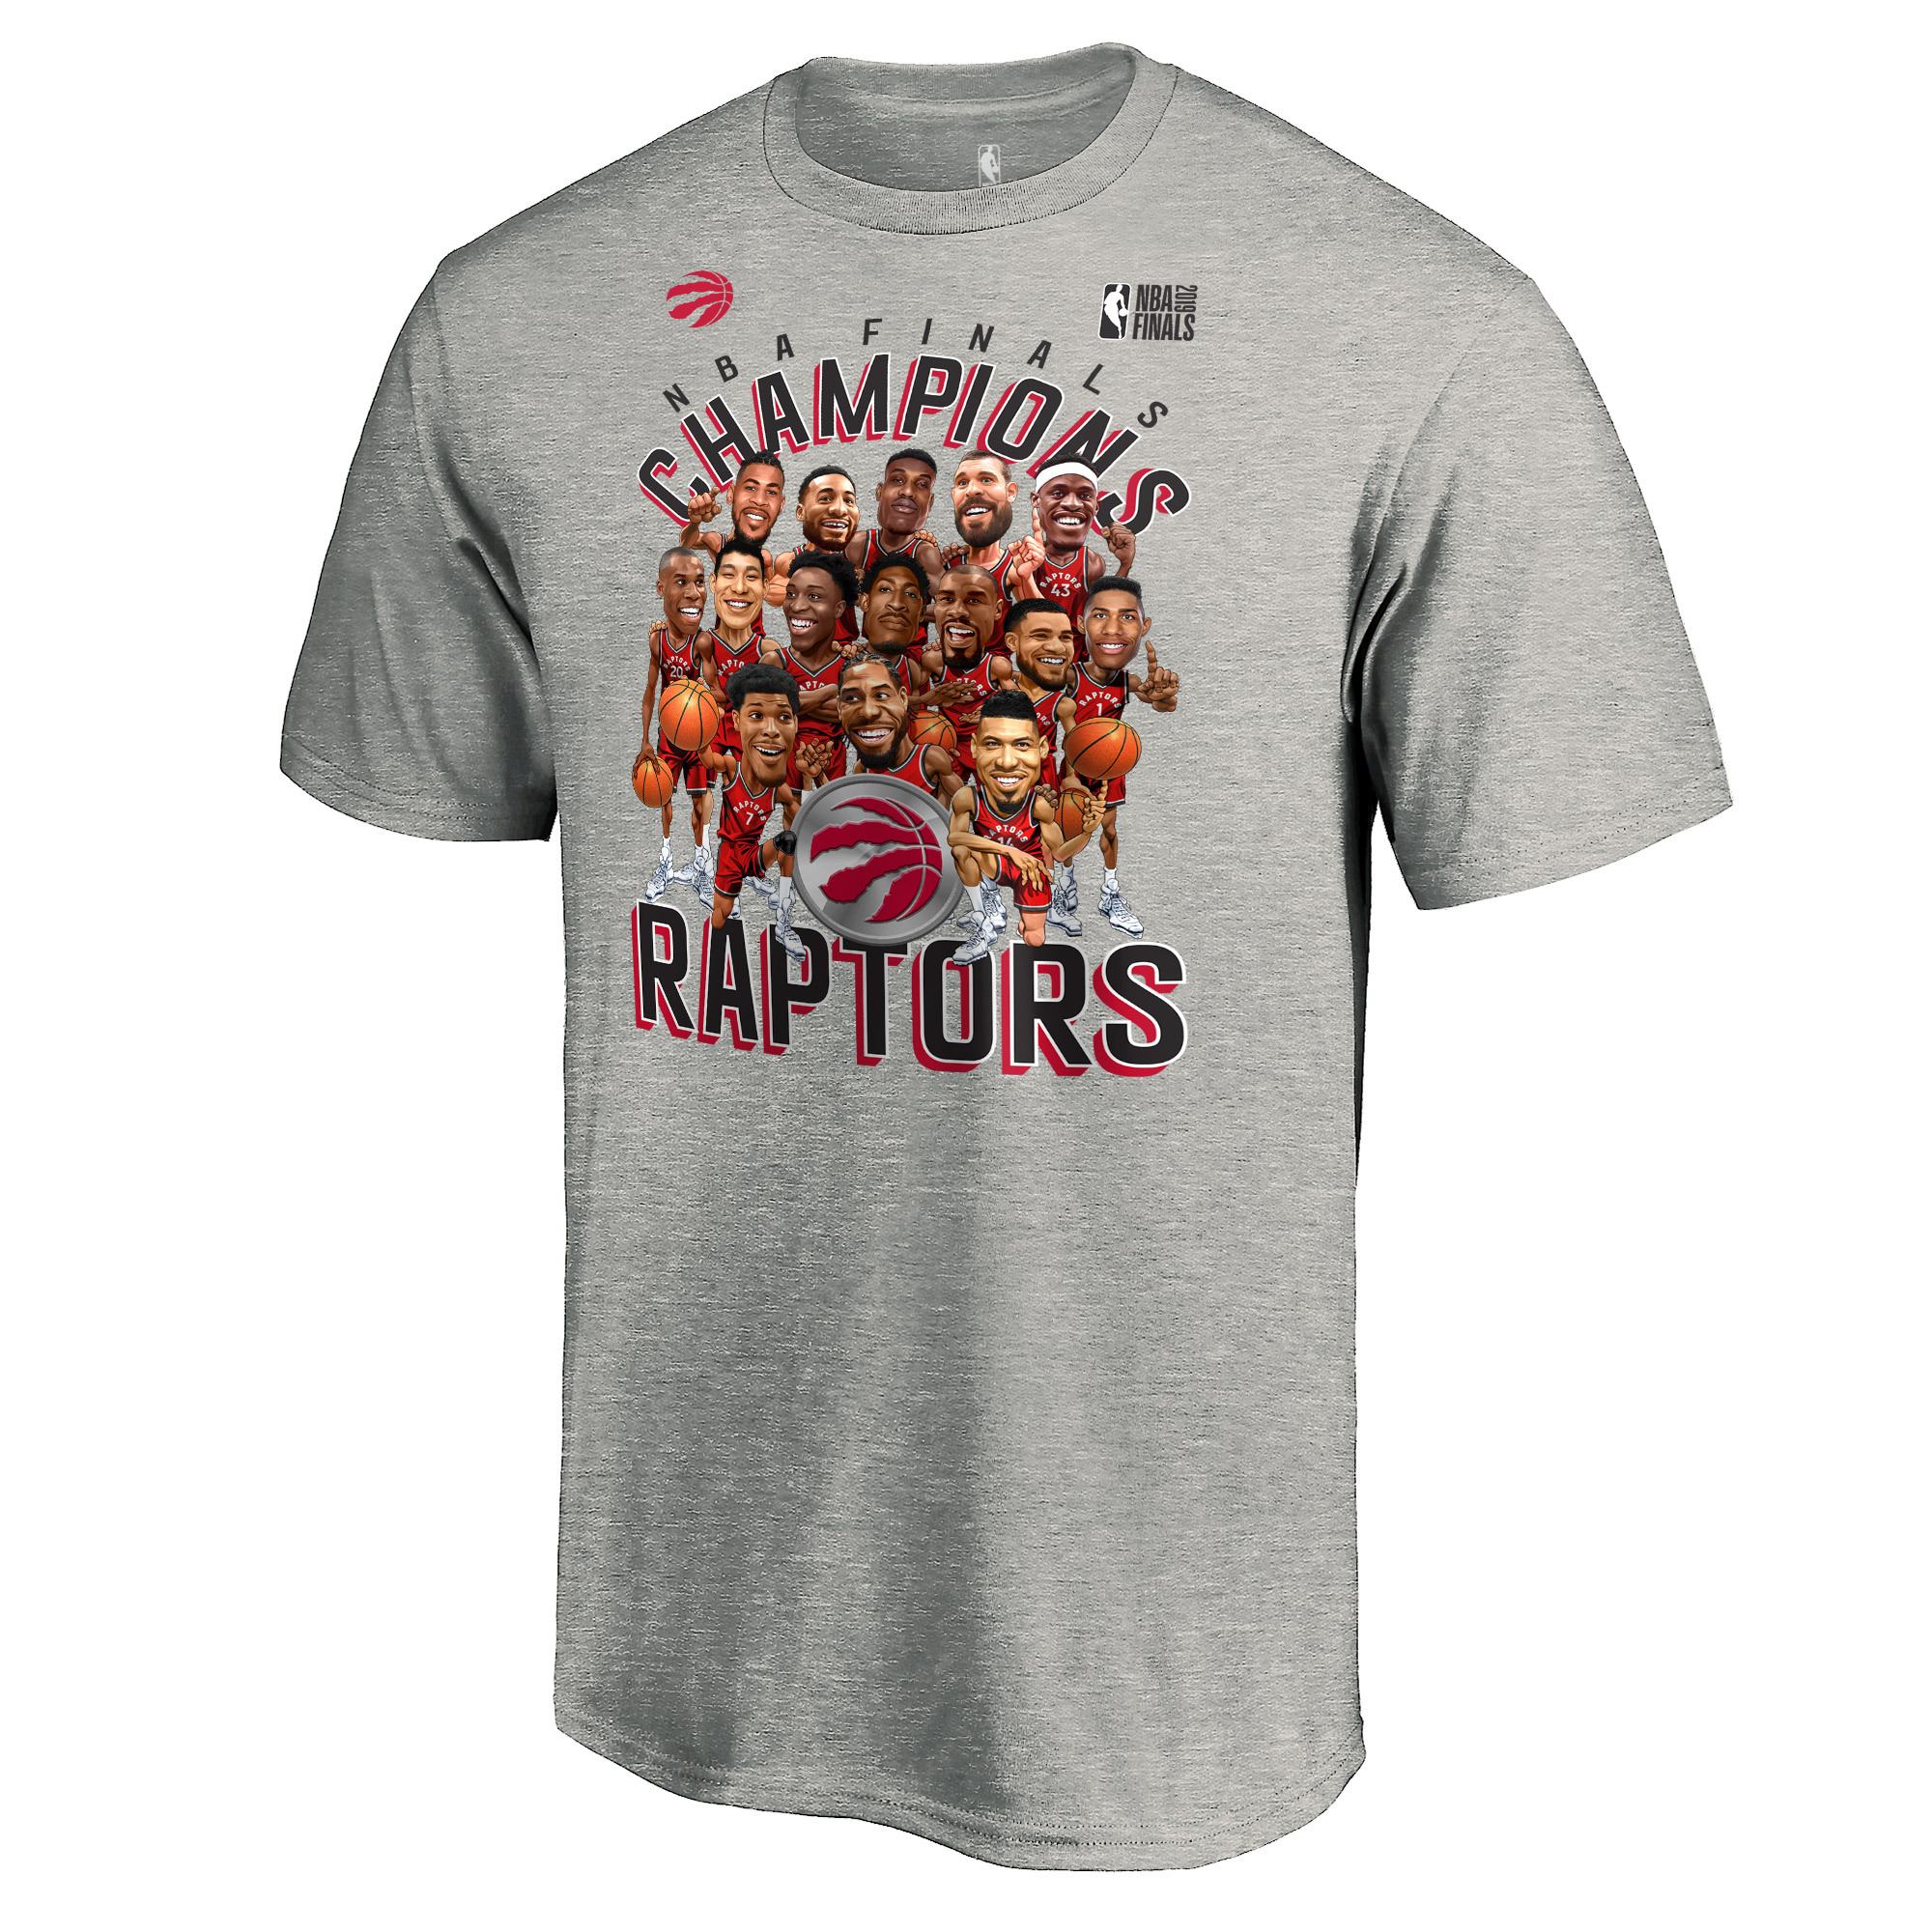 raptors championship apparel